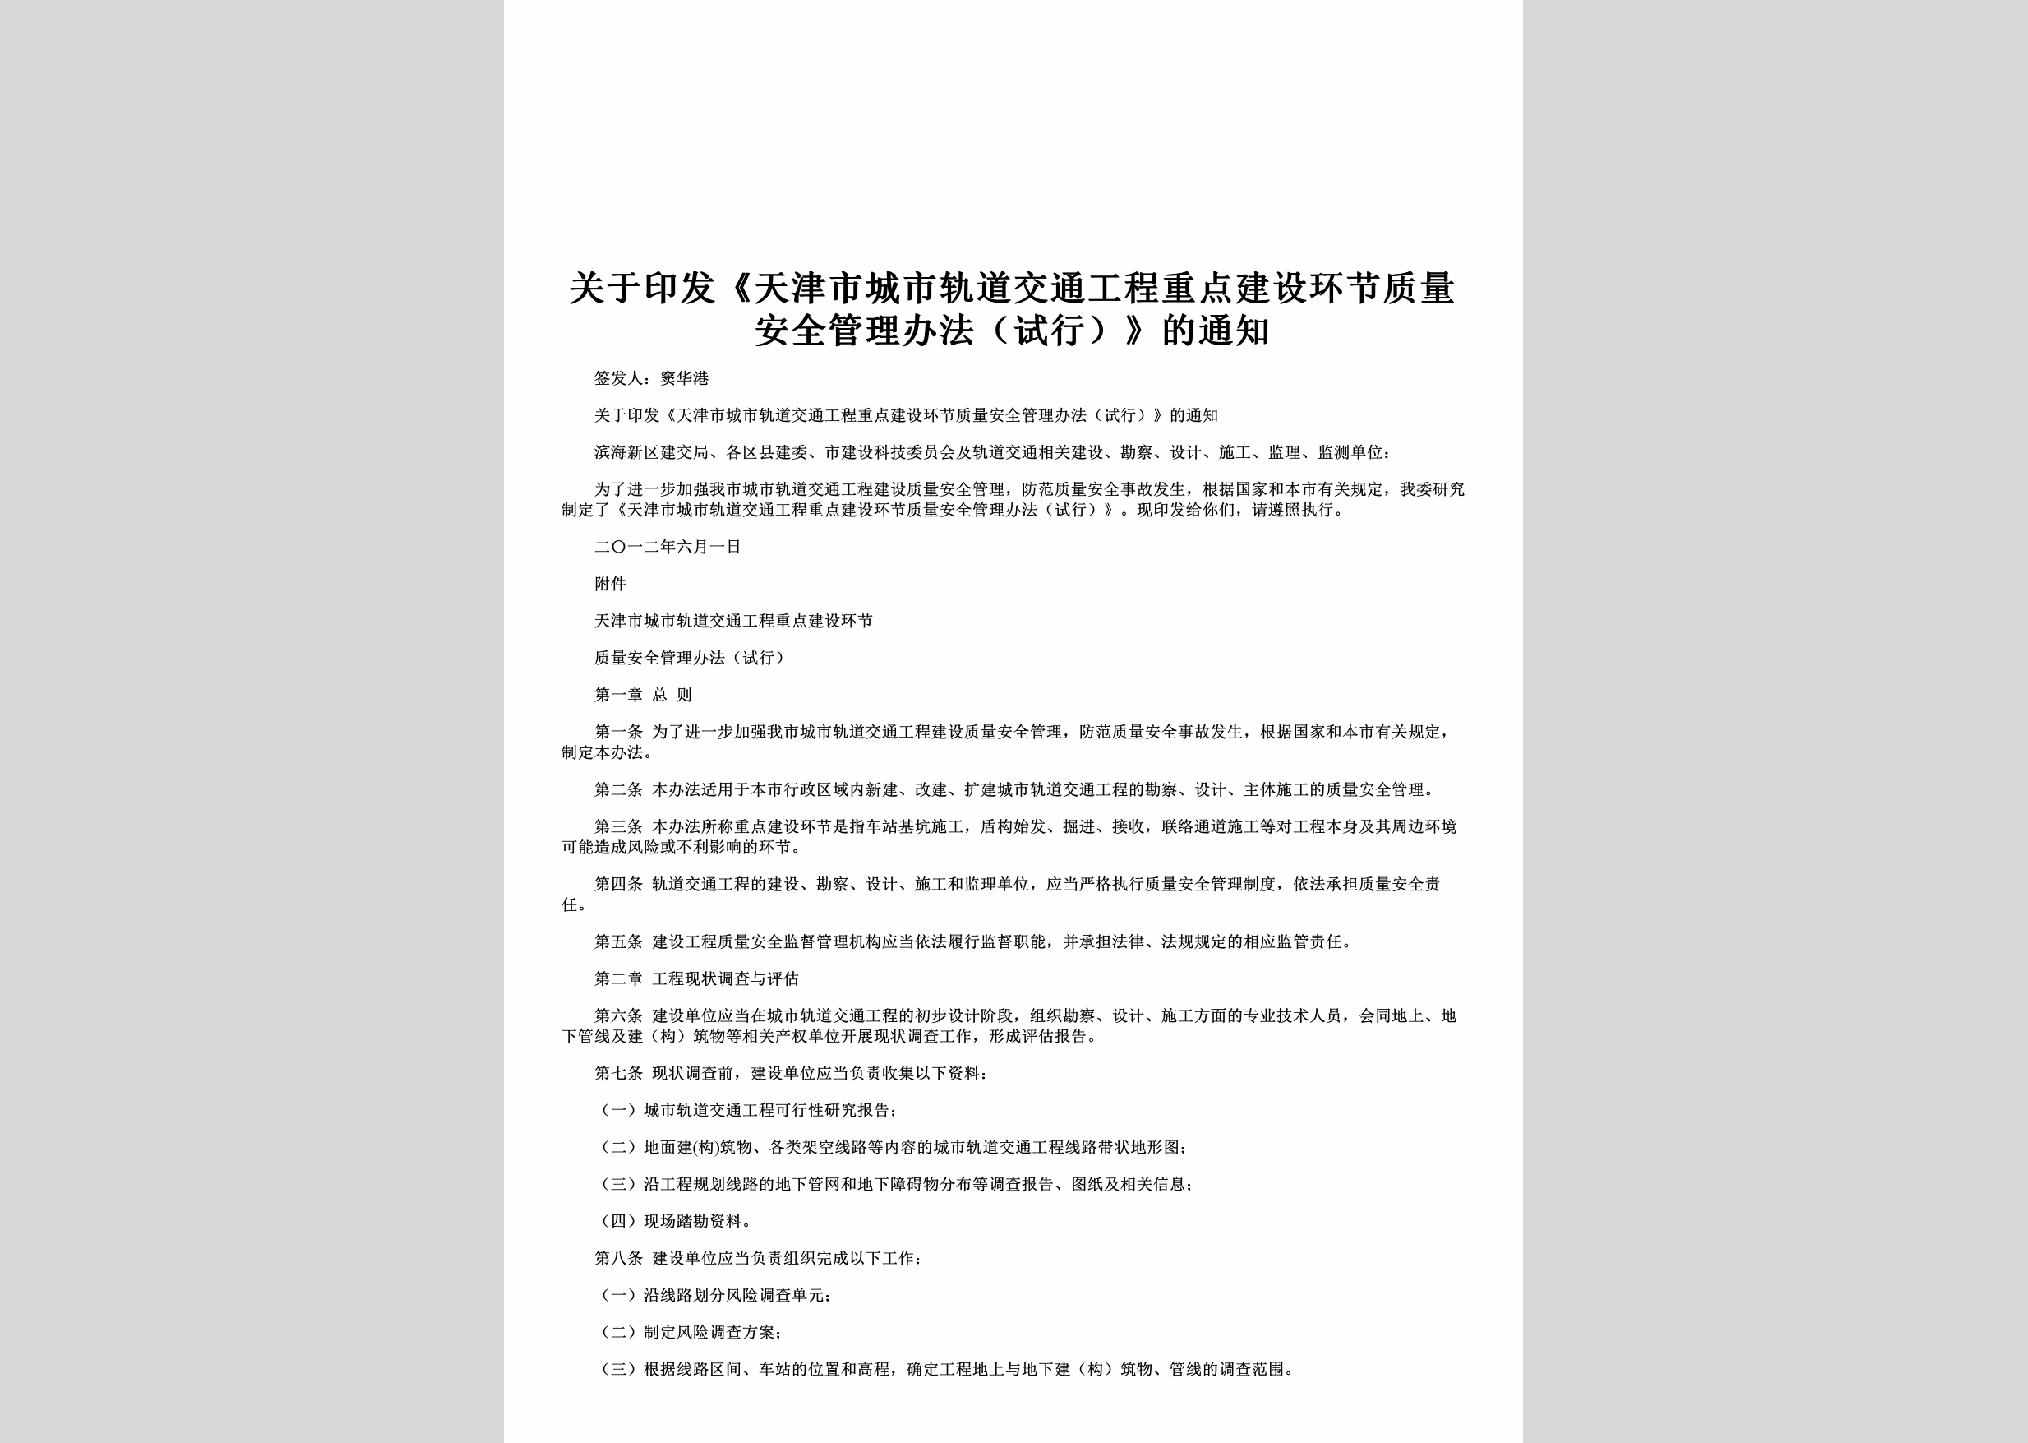 TJ-GYTJS-2012：关于印发《天津市城市轨道交通工程重点建设环节质量安全管理办法（试行）》的通知